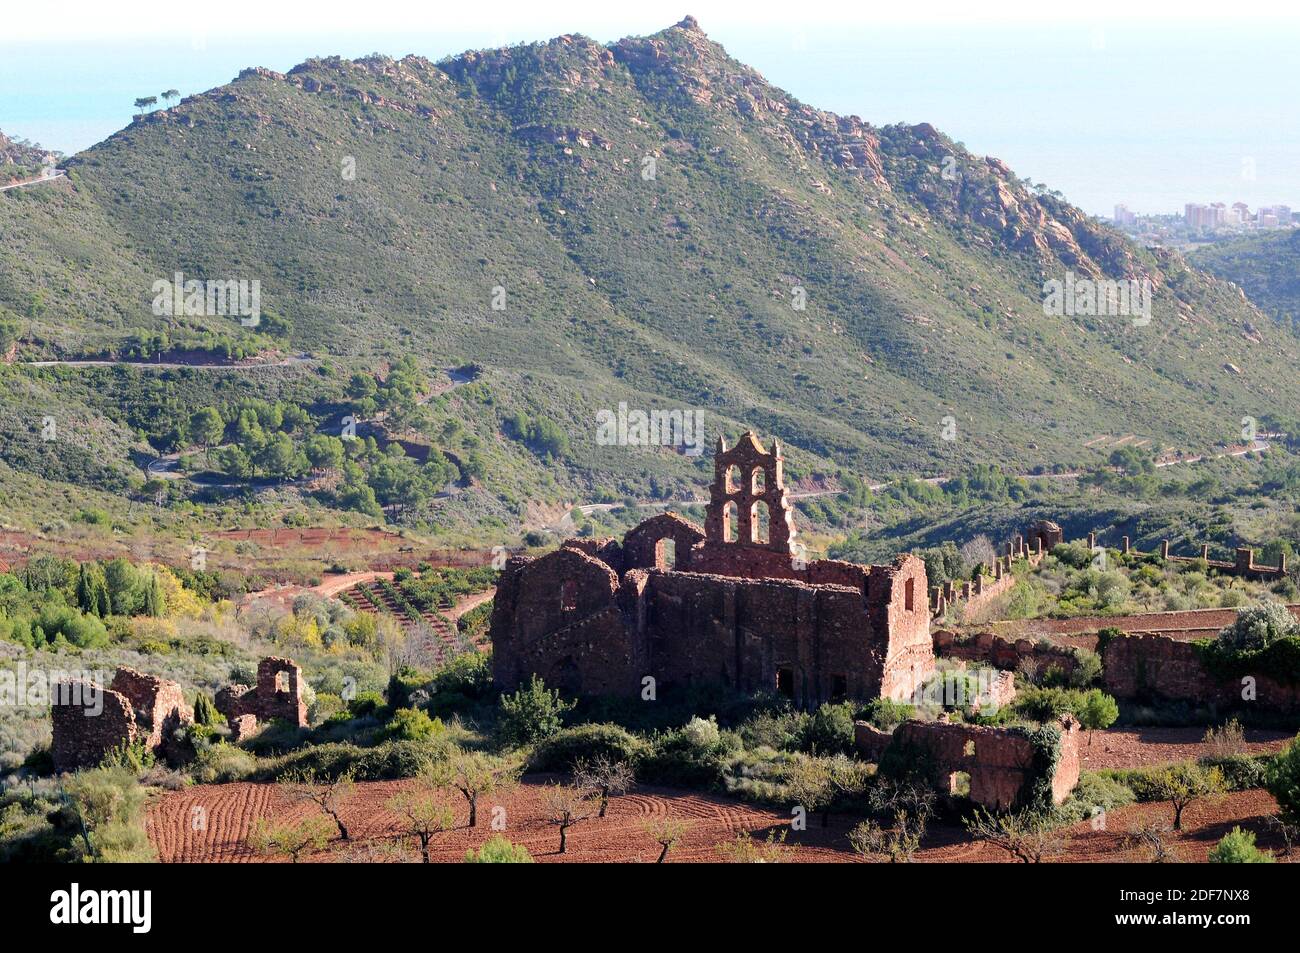 Desierto de las Palmas Natural Park, Monasterio Carmelita Antiguo (17-18th centuries). Plana Alta, Castellon, Comunidad Valenciana, Spain. Stock Photo